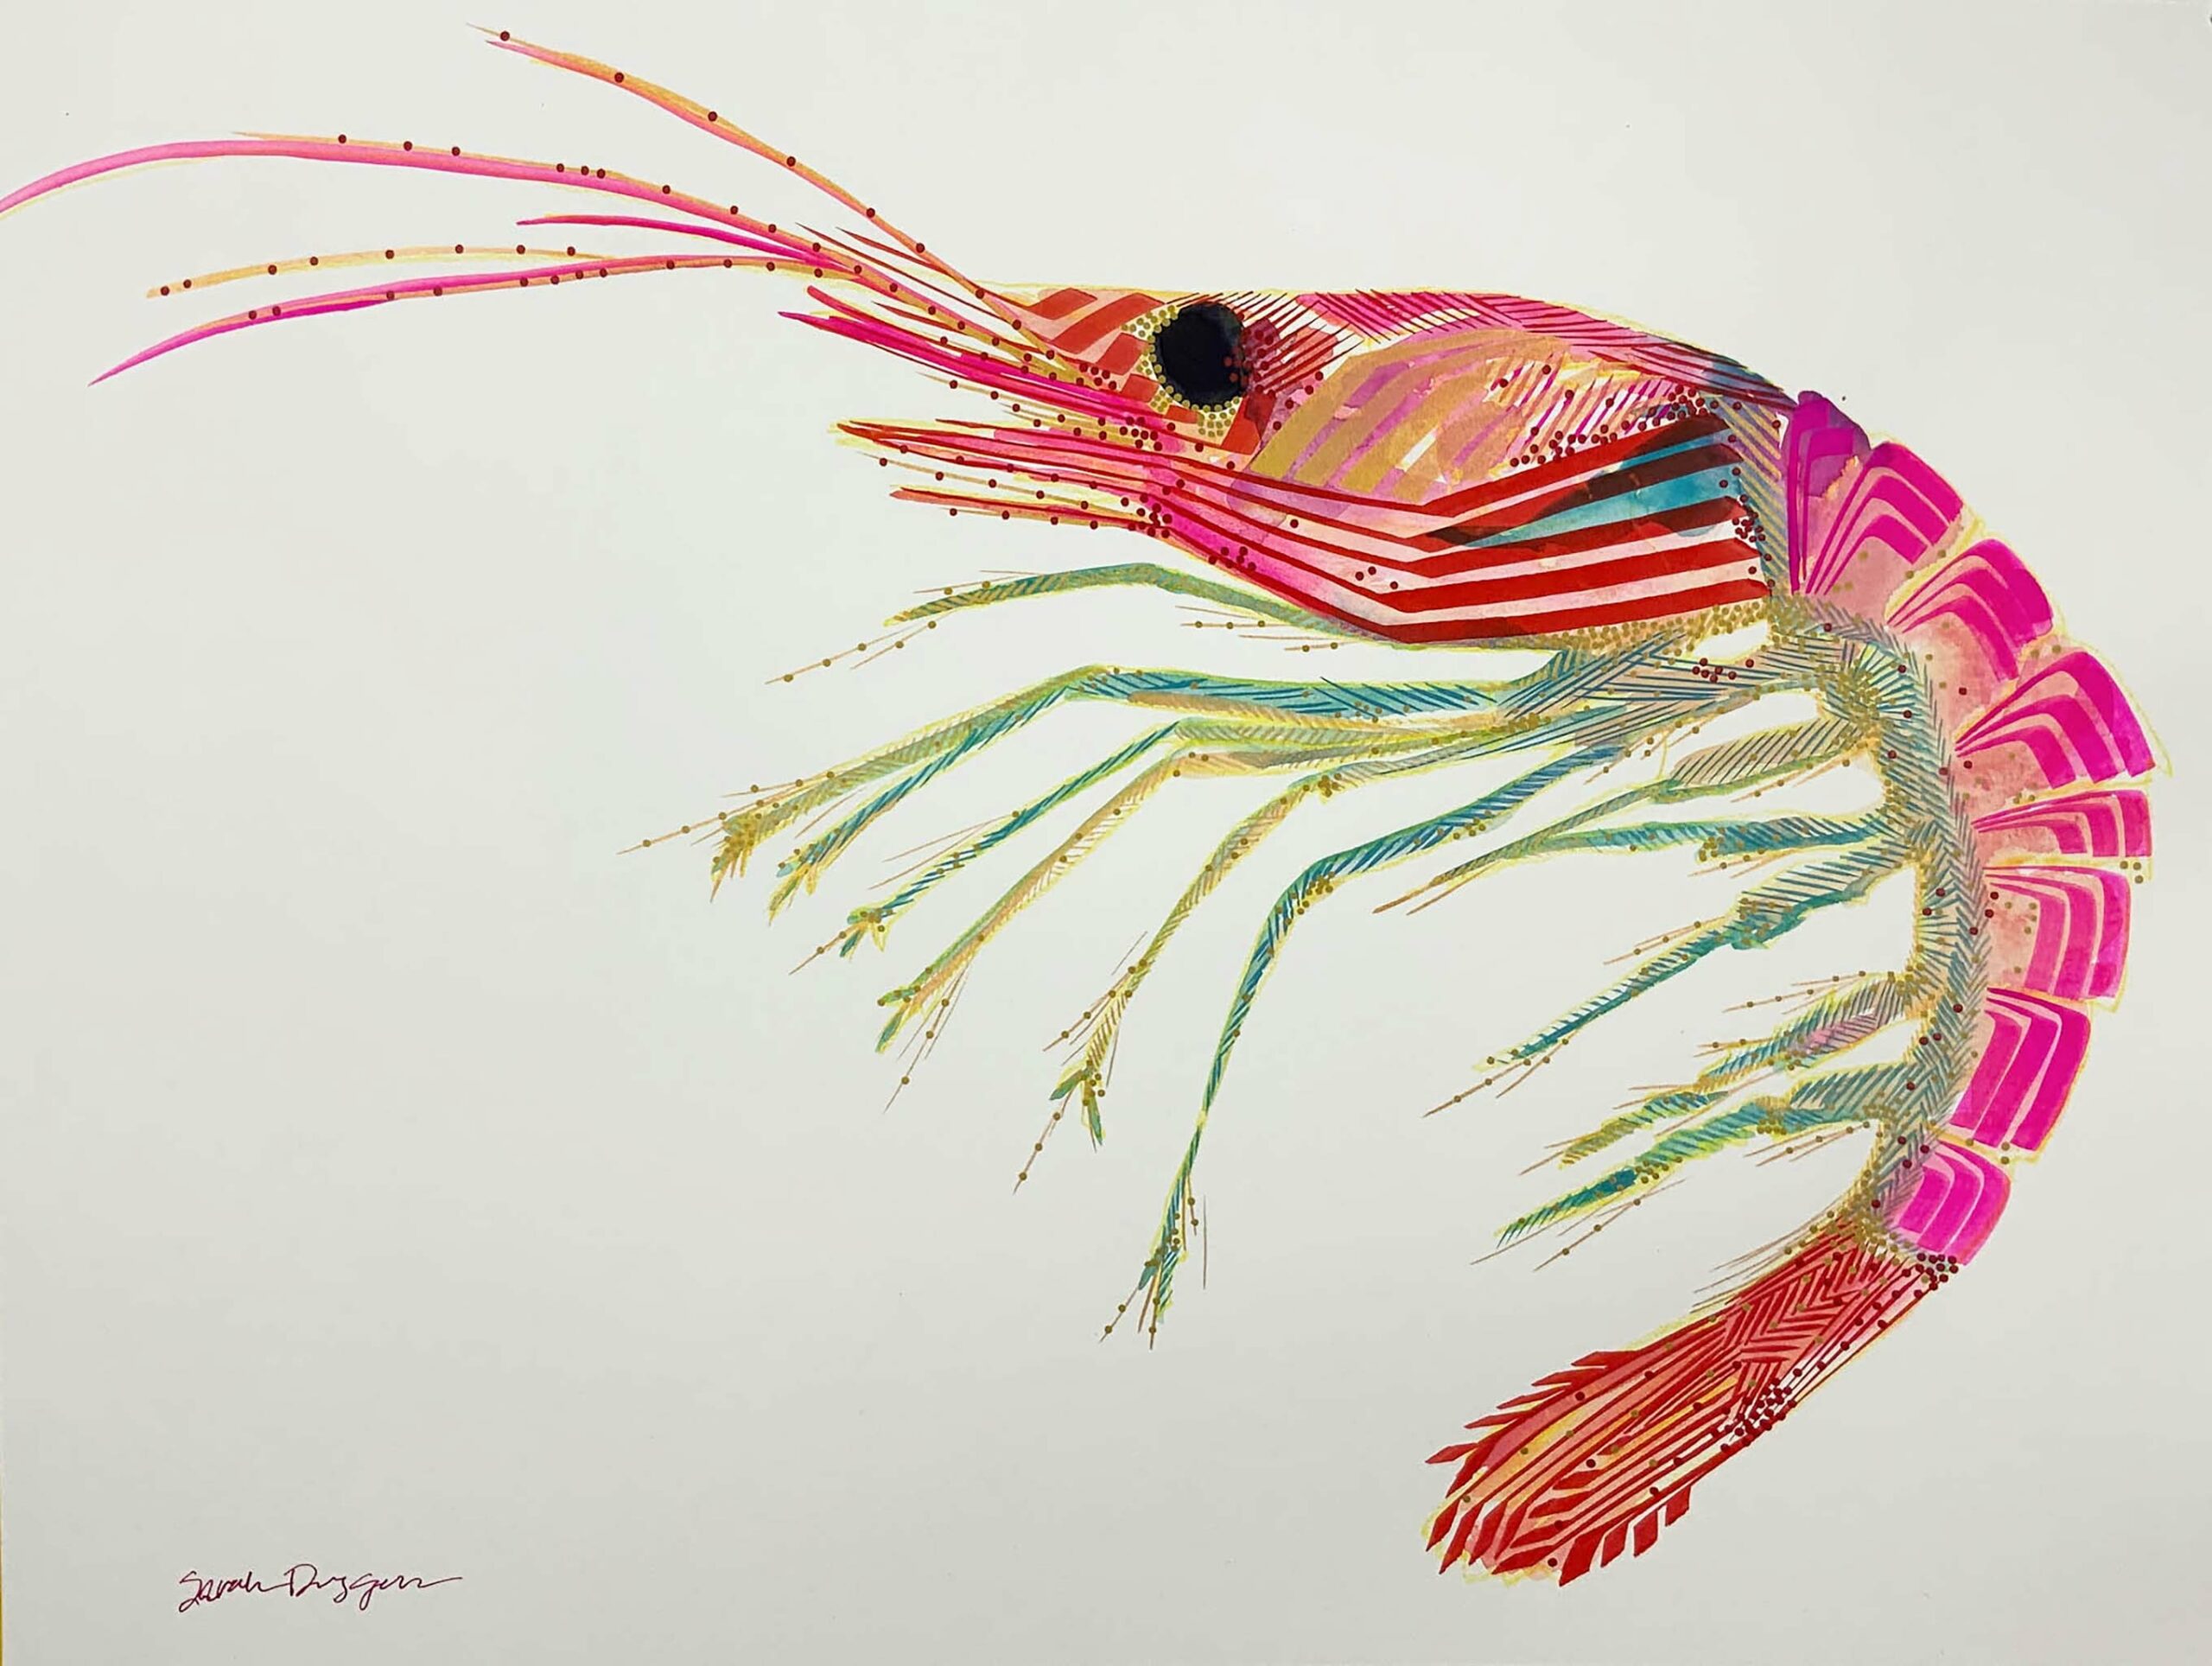 Stylized pink gouache shrimp on watercolor paper.